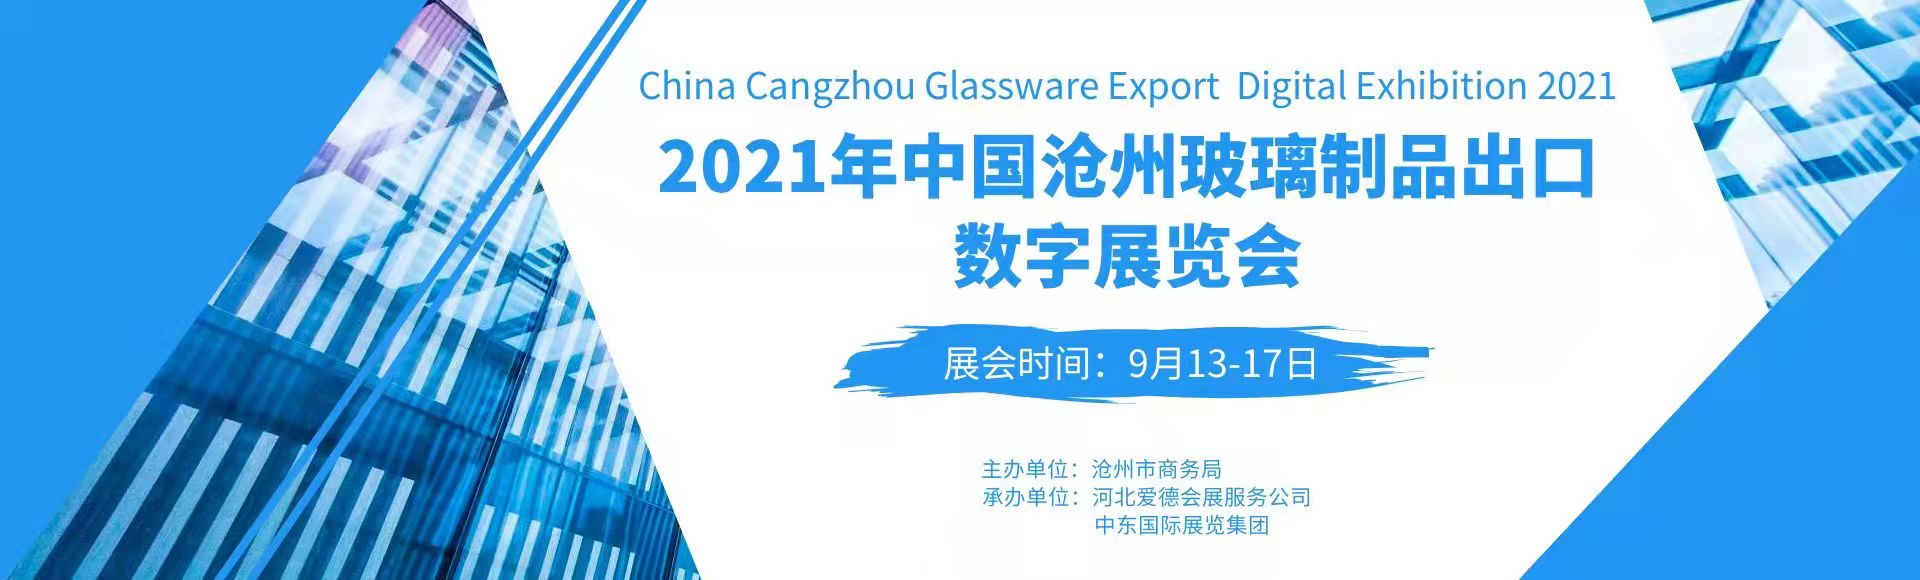 2021年中国（沧州）玻璃制品<font color=#ff0000>出口</font>数字展览会即将开幕